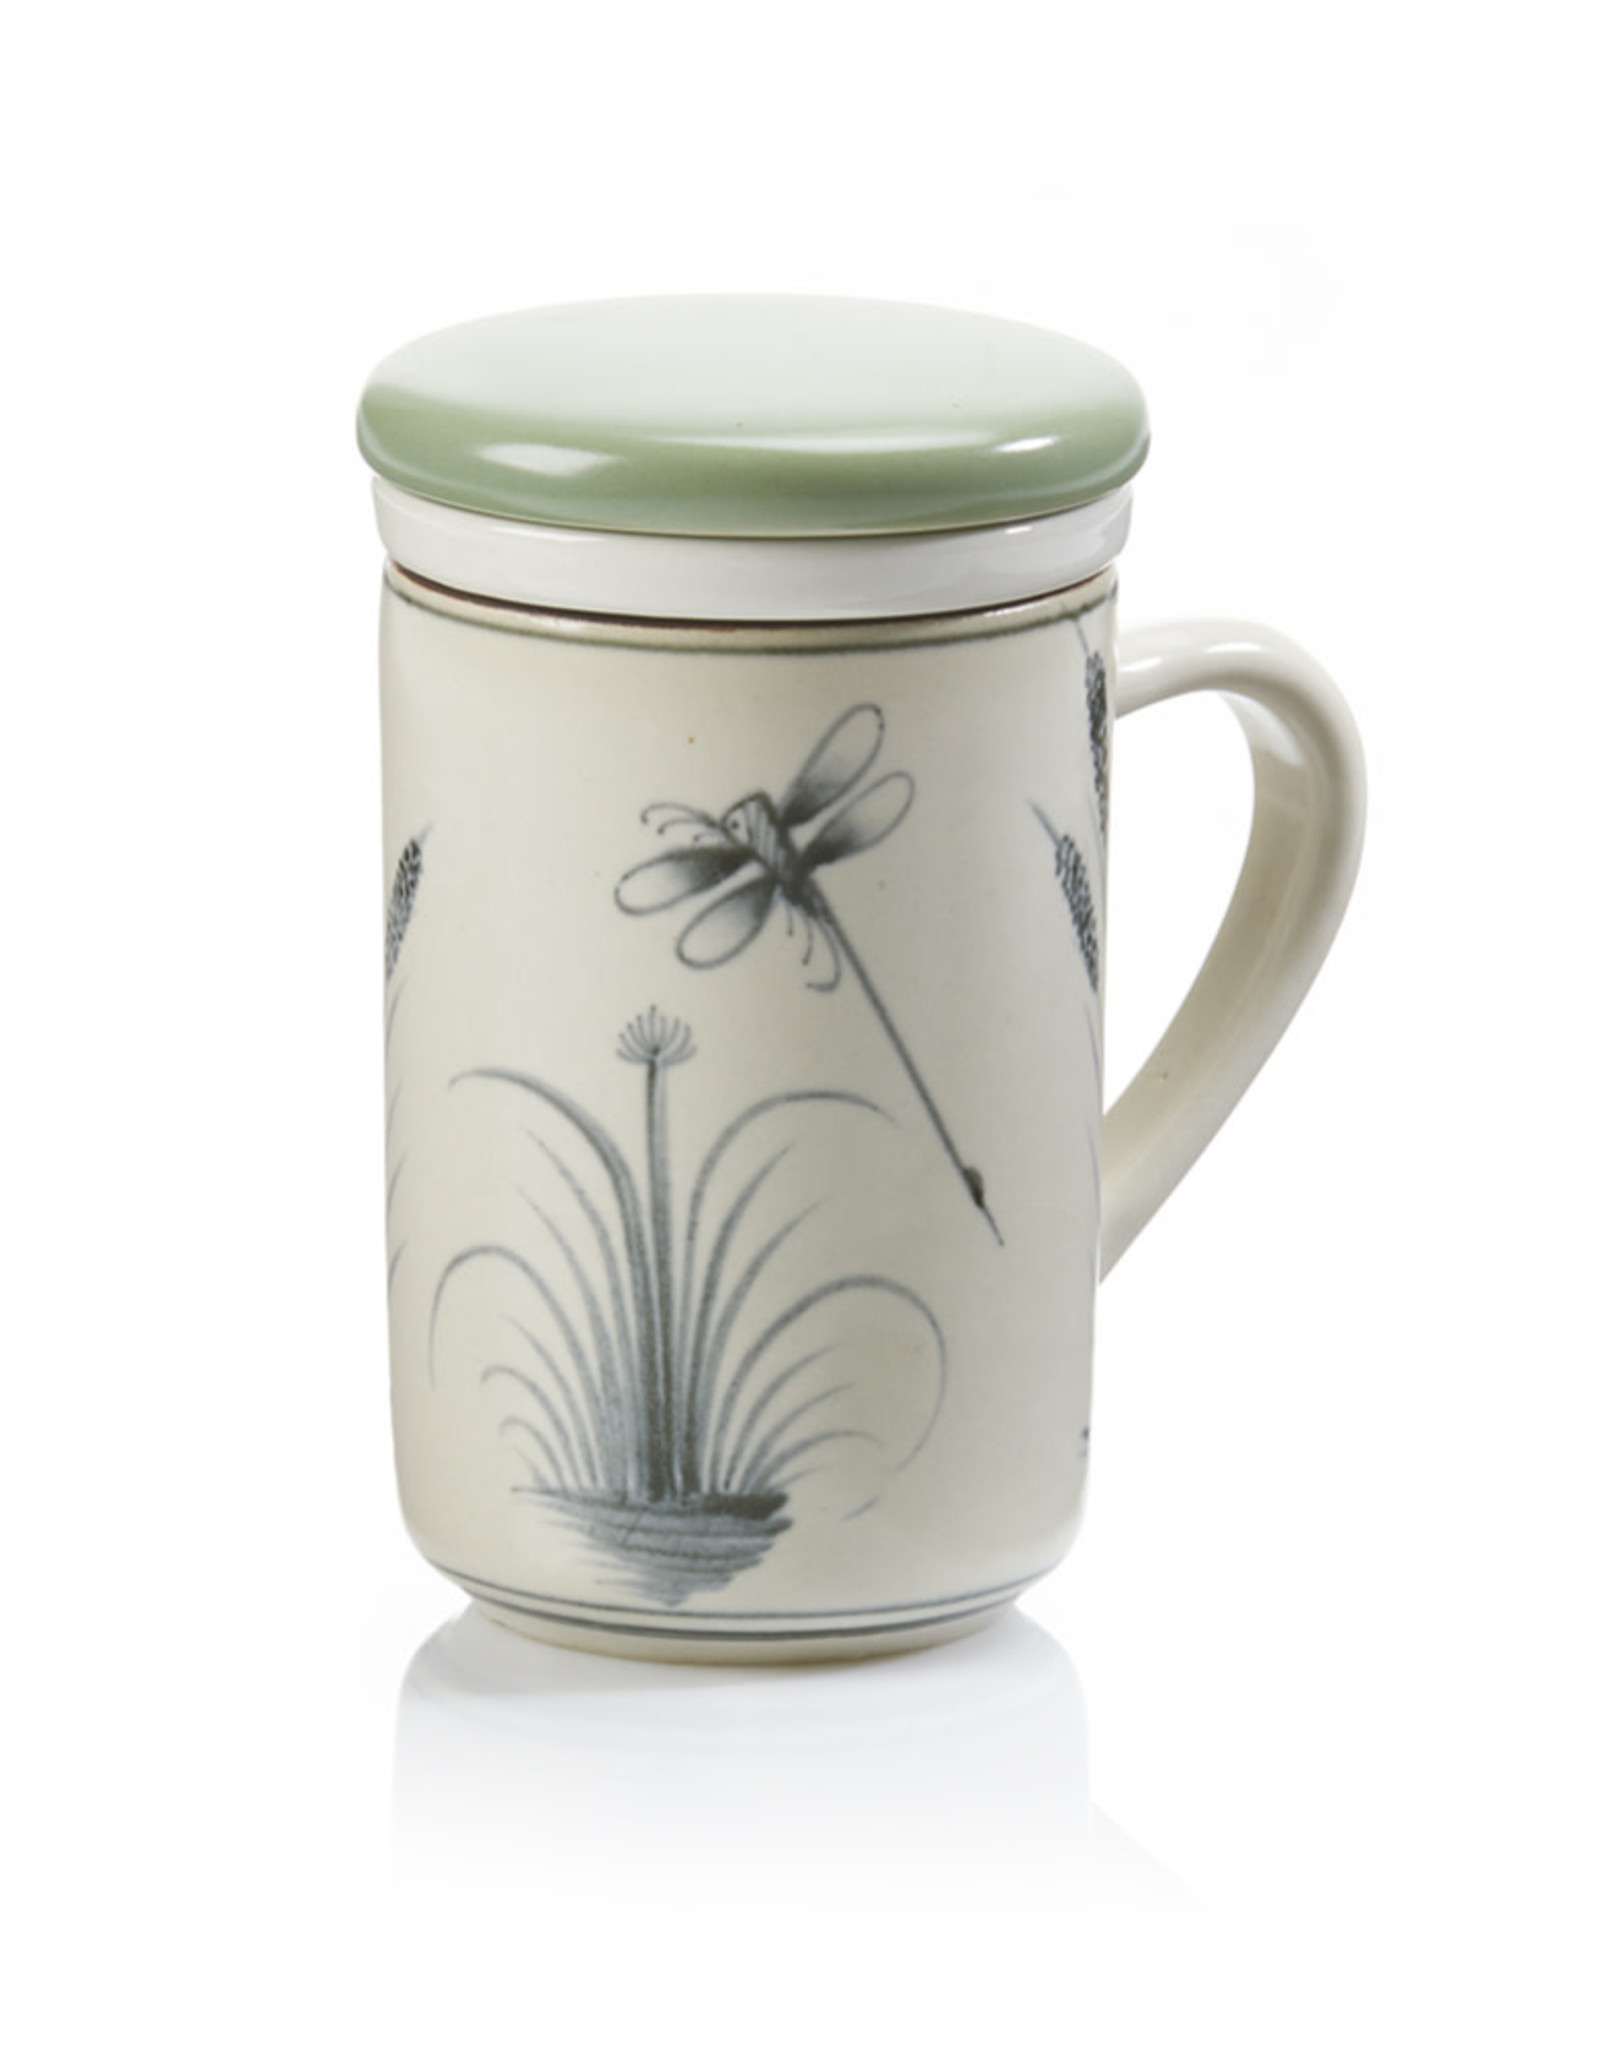 Serrv Dragonfly Tea Infuser Mug